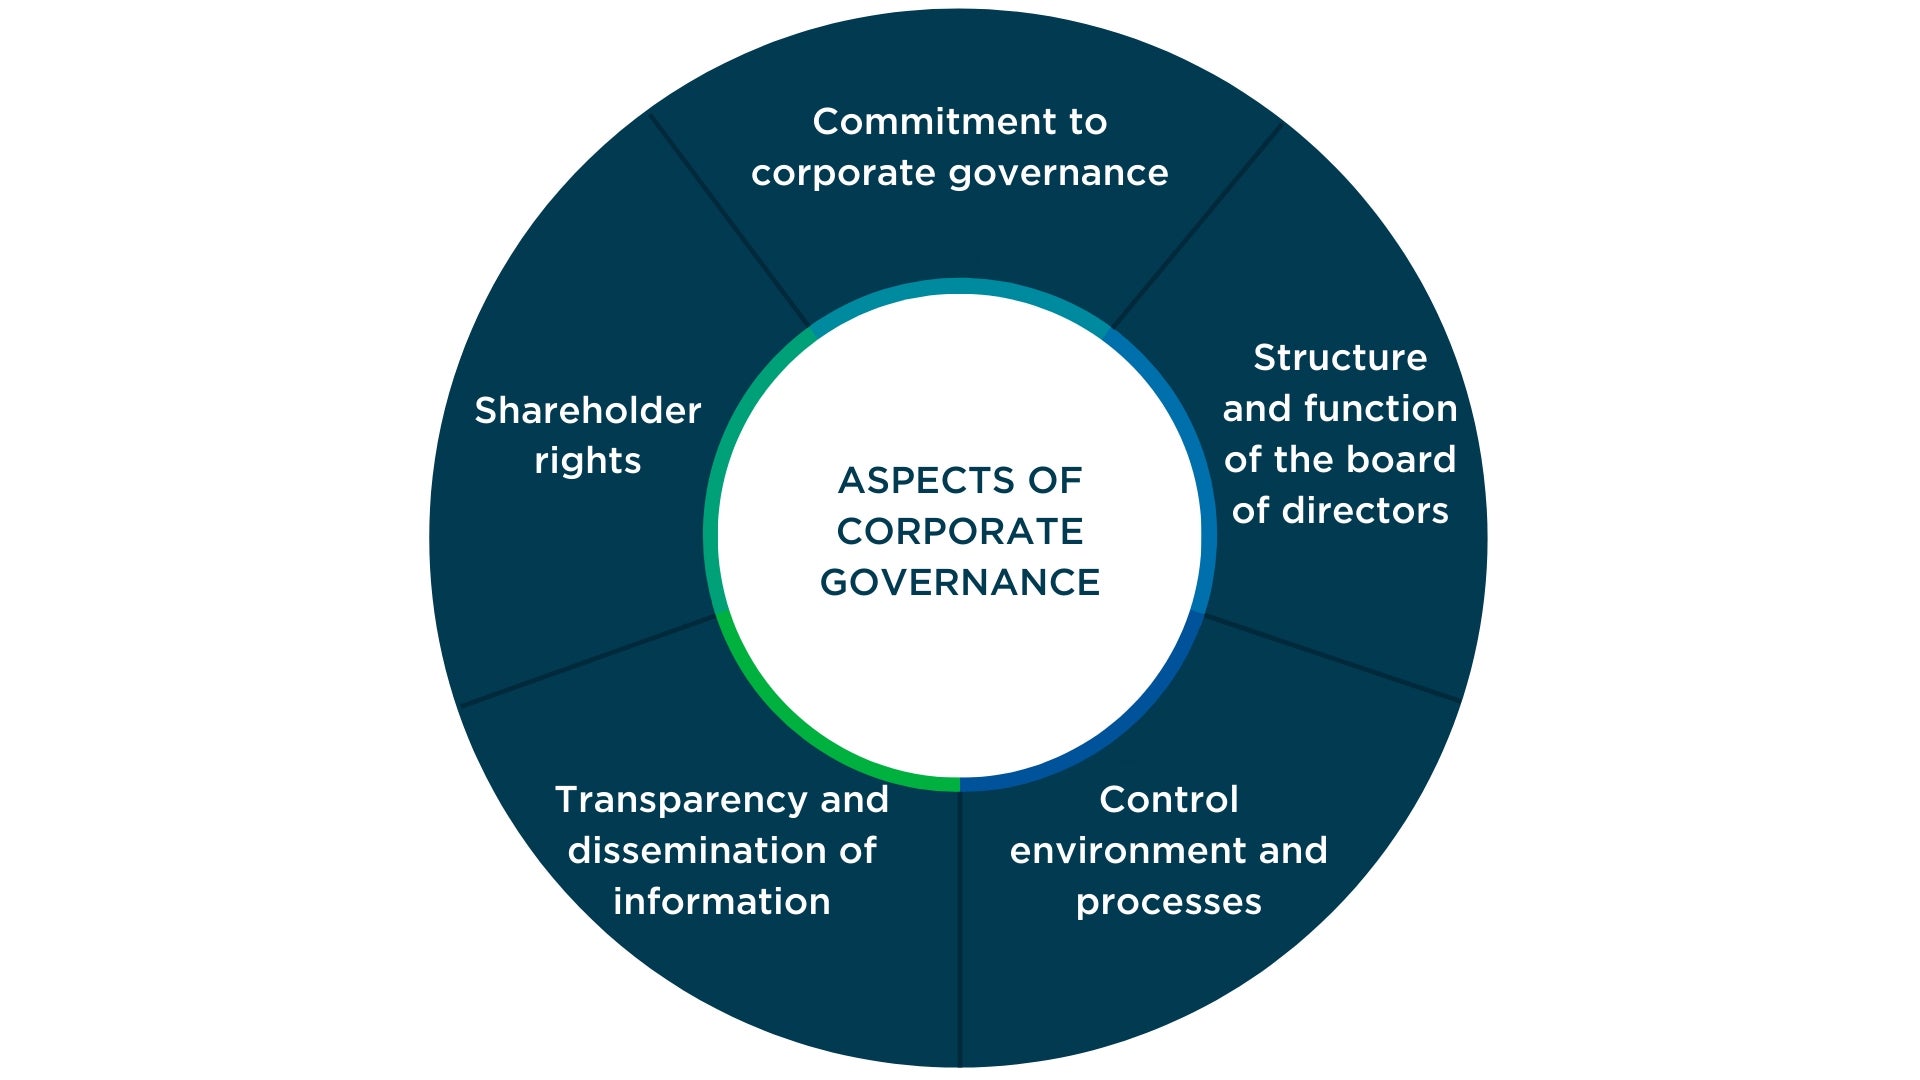 Corporate governance strategy